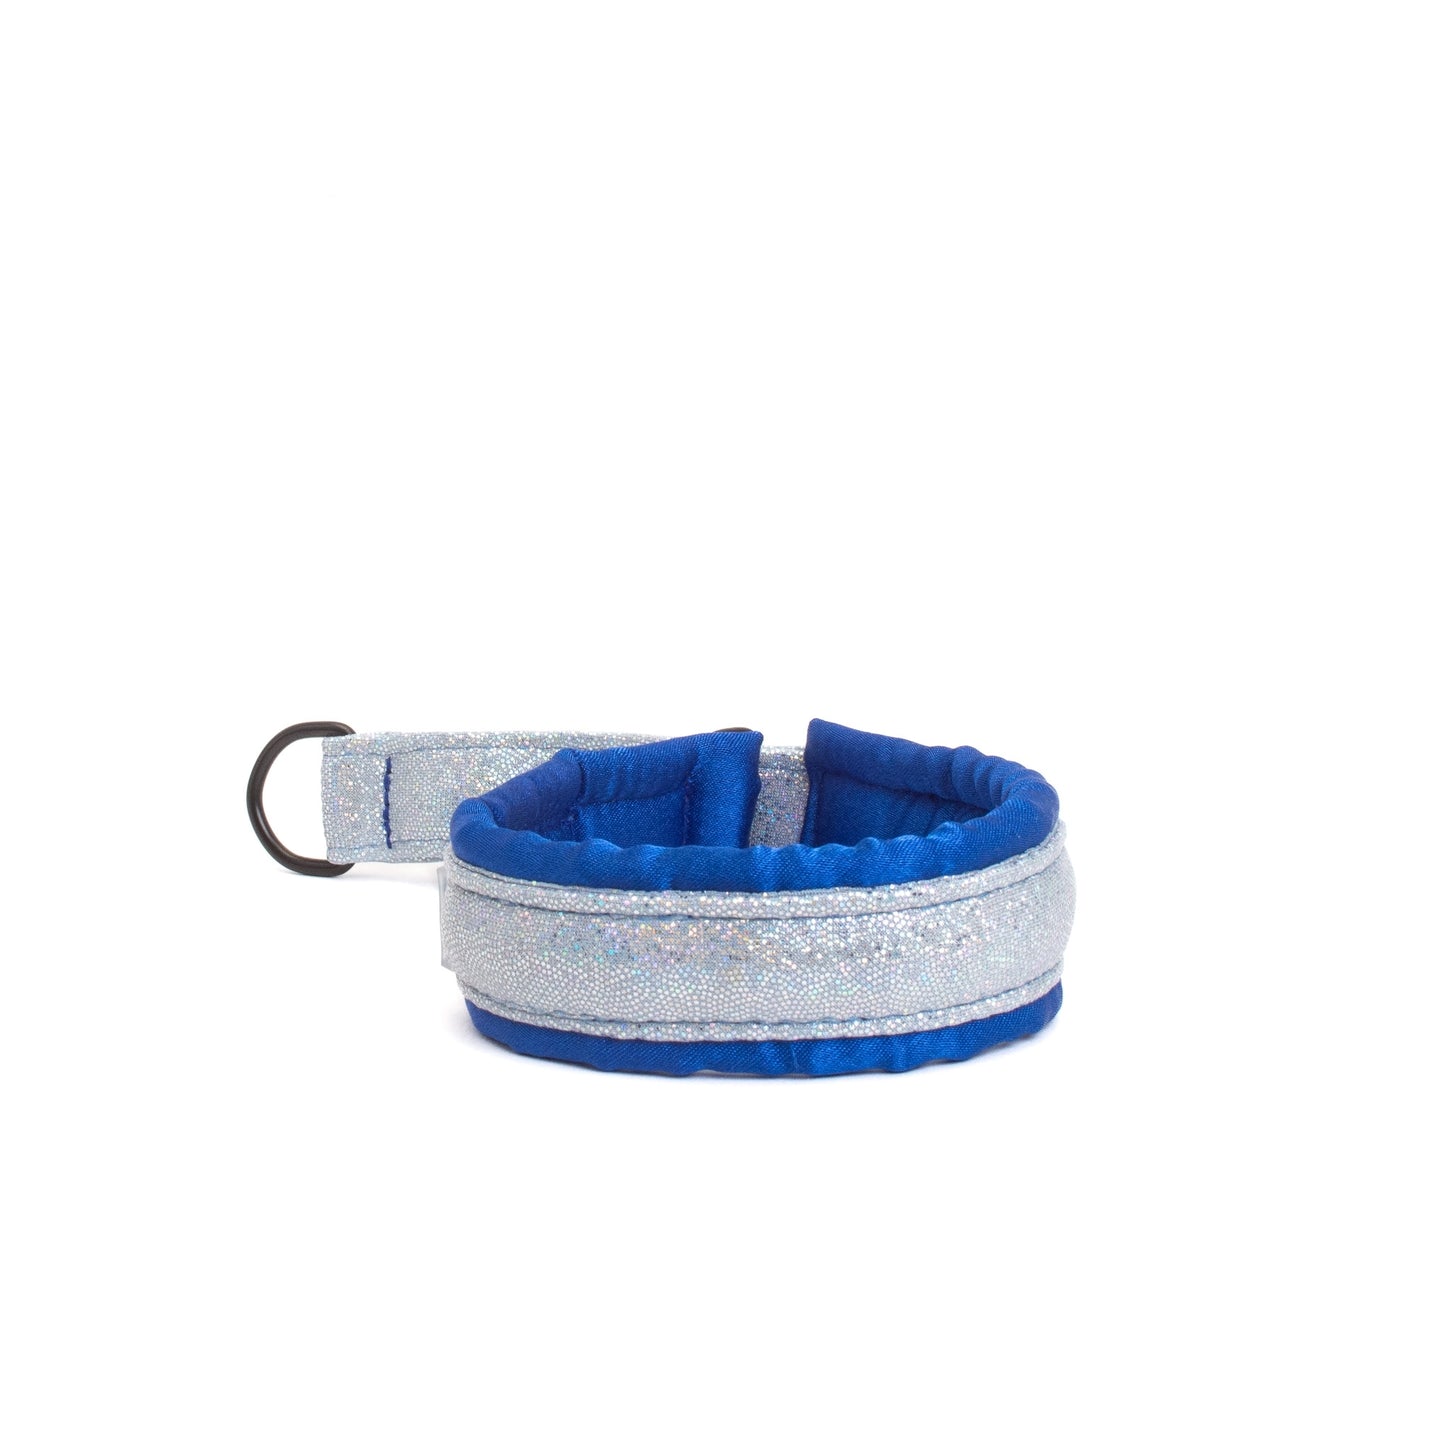 Small / Medium / Large Martingale Collar Poodle Supply Royal Blue